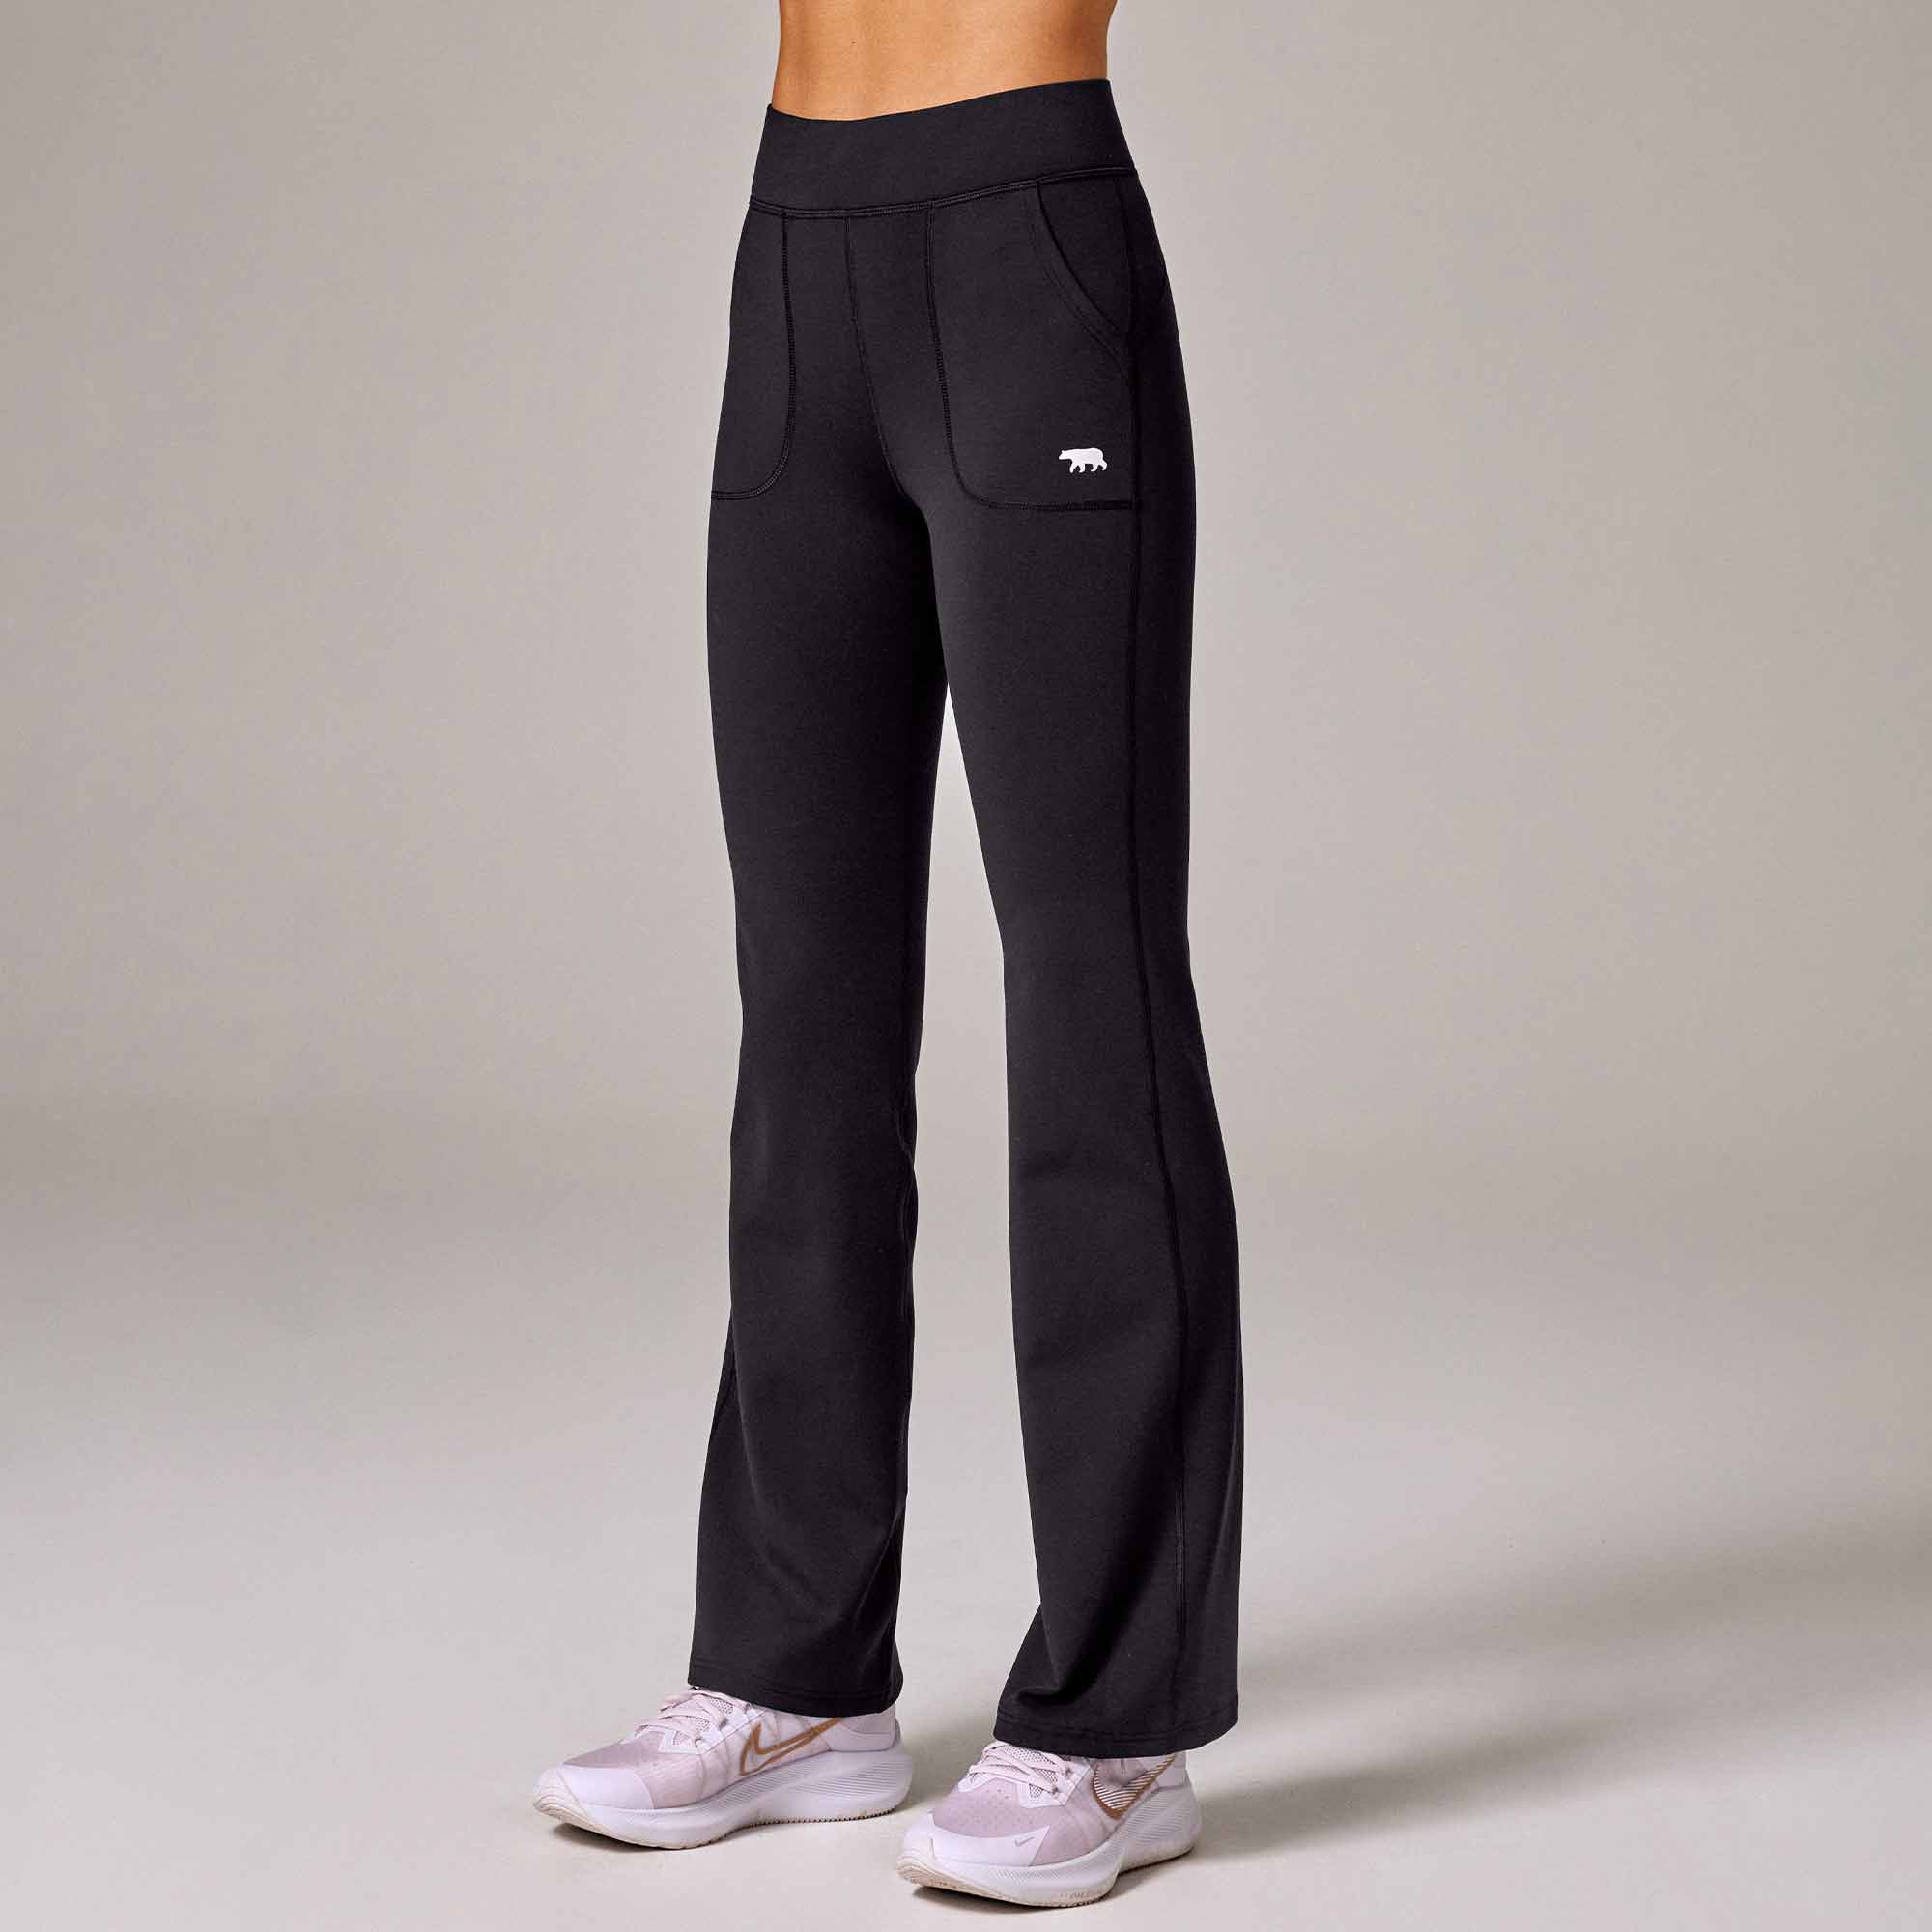 Running Bare Womens Thermal Pocket Yoga Pants 31 inch